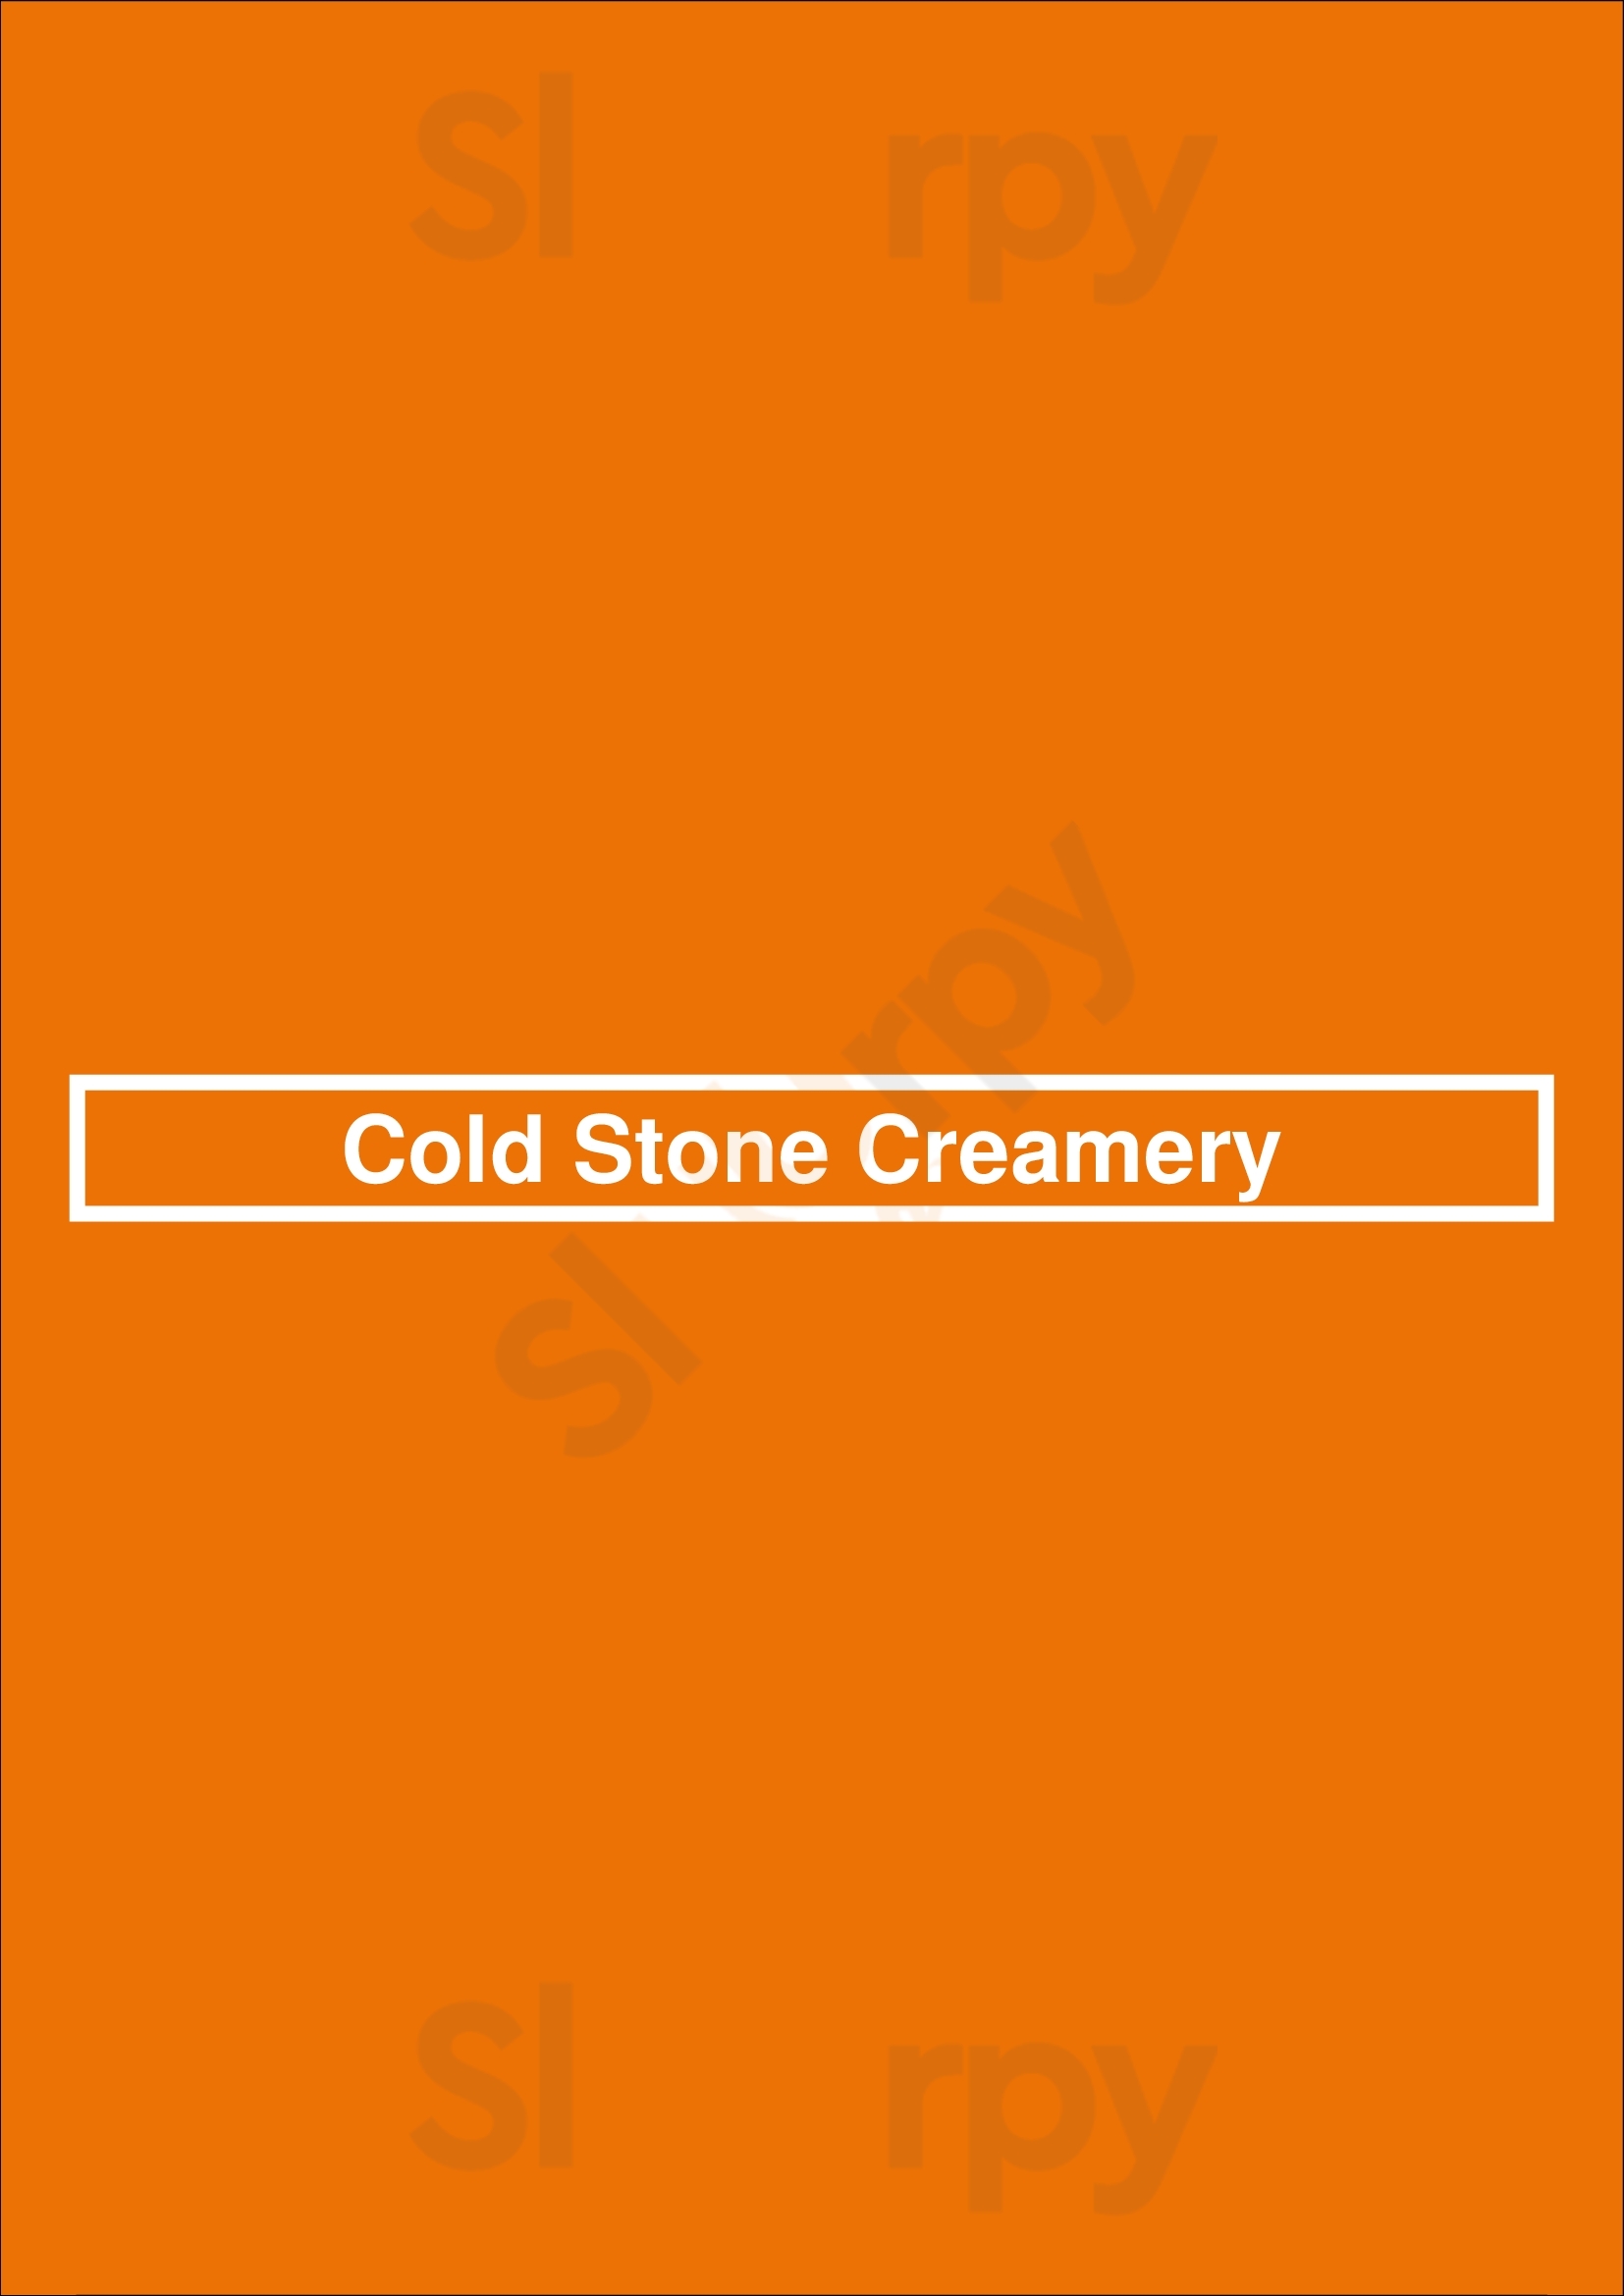 Cold Stone Creamery Jacksonville Menu - 1